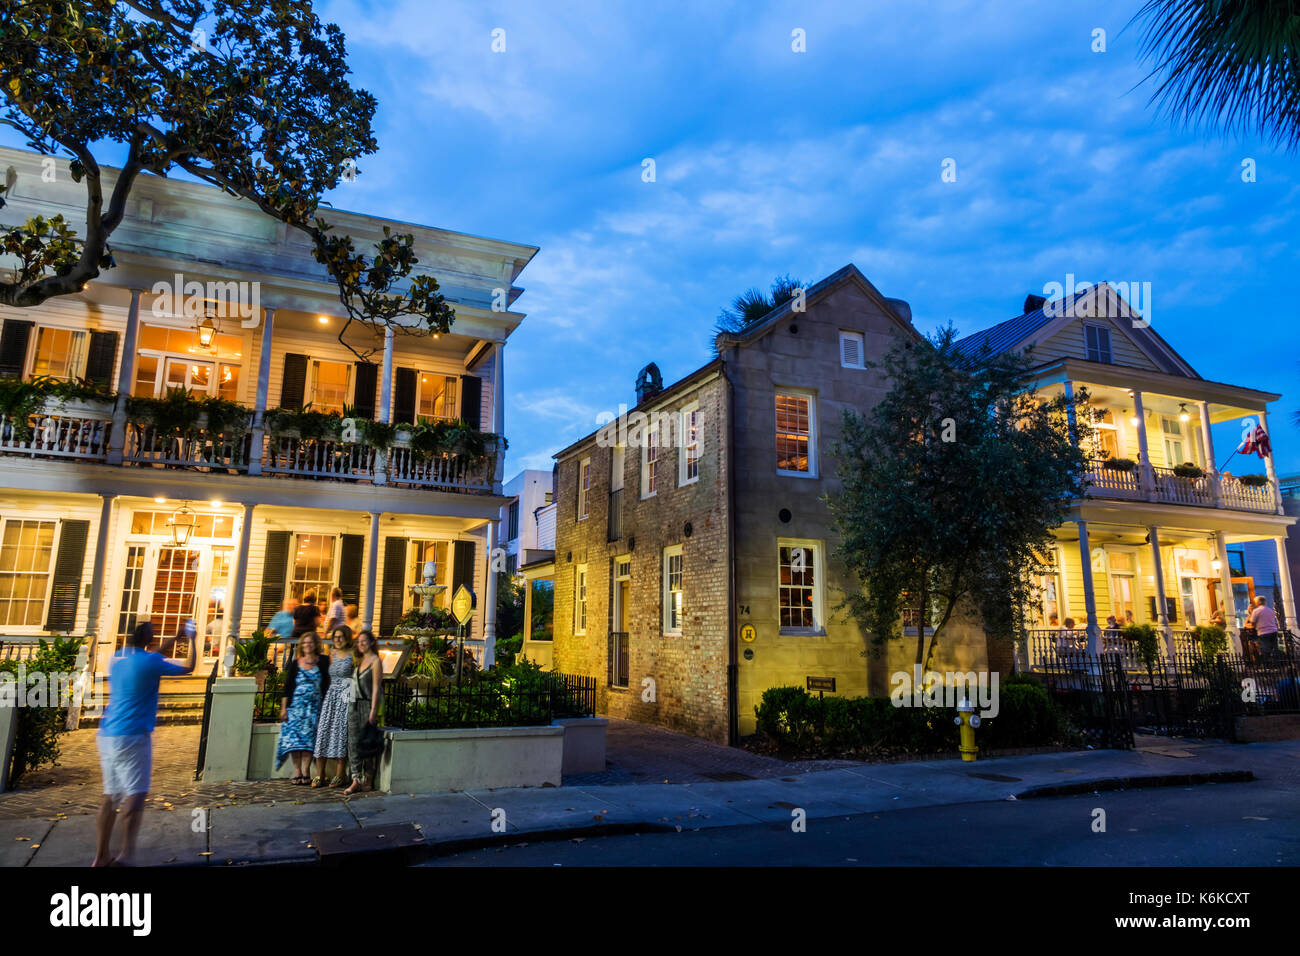 Charleston South Carolina, centro storico, Queen Street, Poogan's Porch, Husk, cucina del sud, ristoranti, ristoranti, ristoranti, ristoranti, caffè, ristoranti, dus Foto Stock